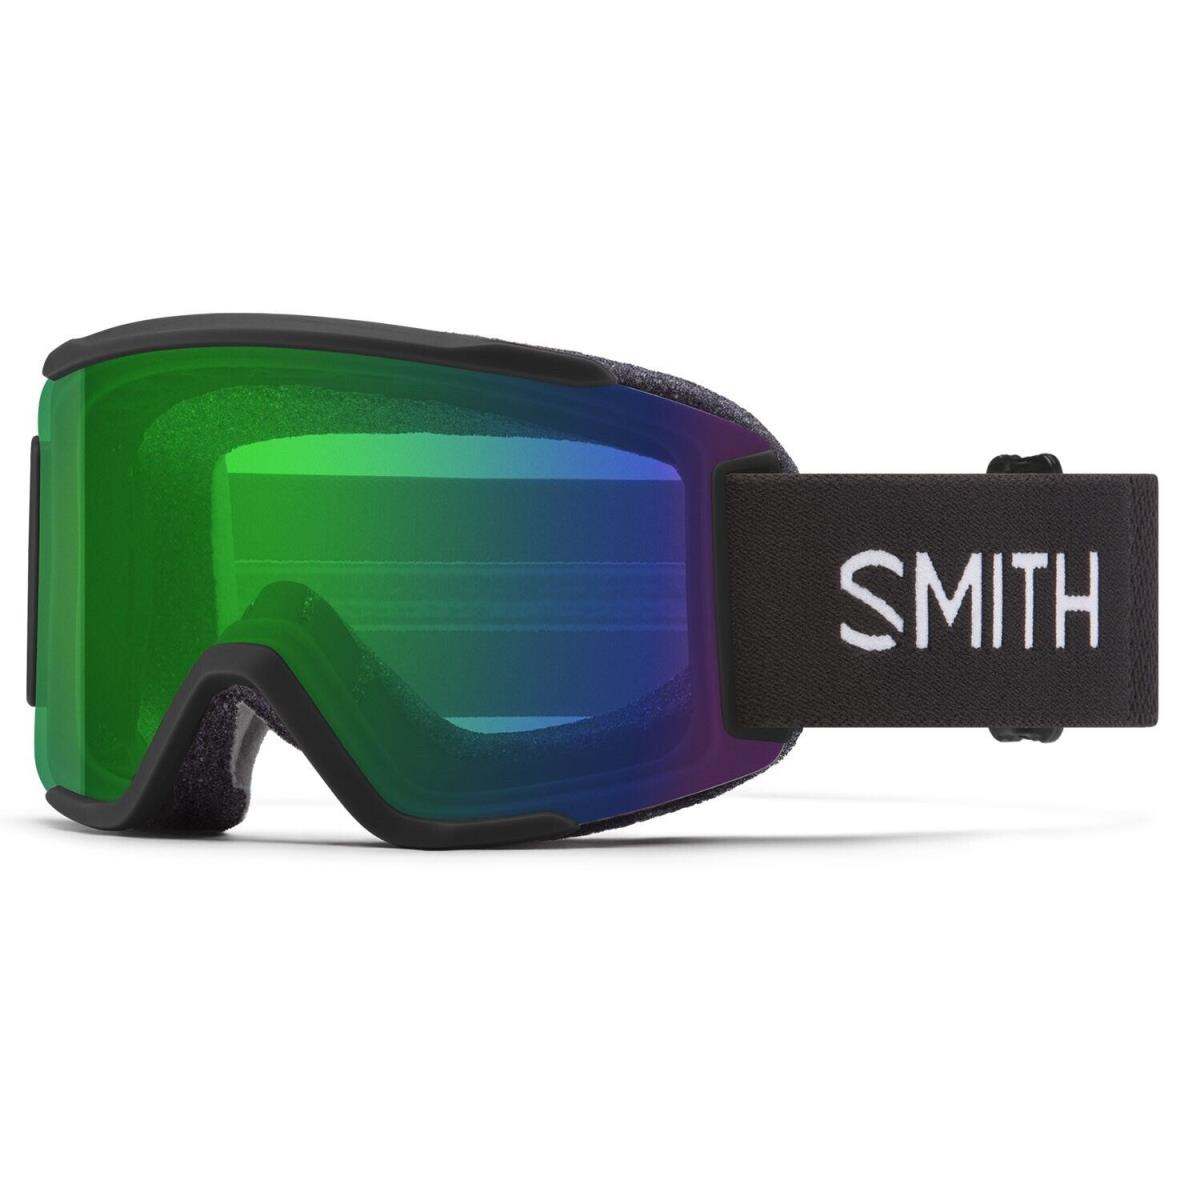 Smith Squad S Snow Goggles Black Frame Everyday Green Mirror Lens +bonus